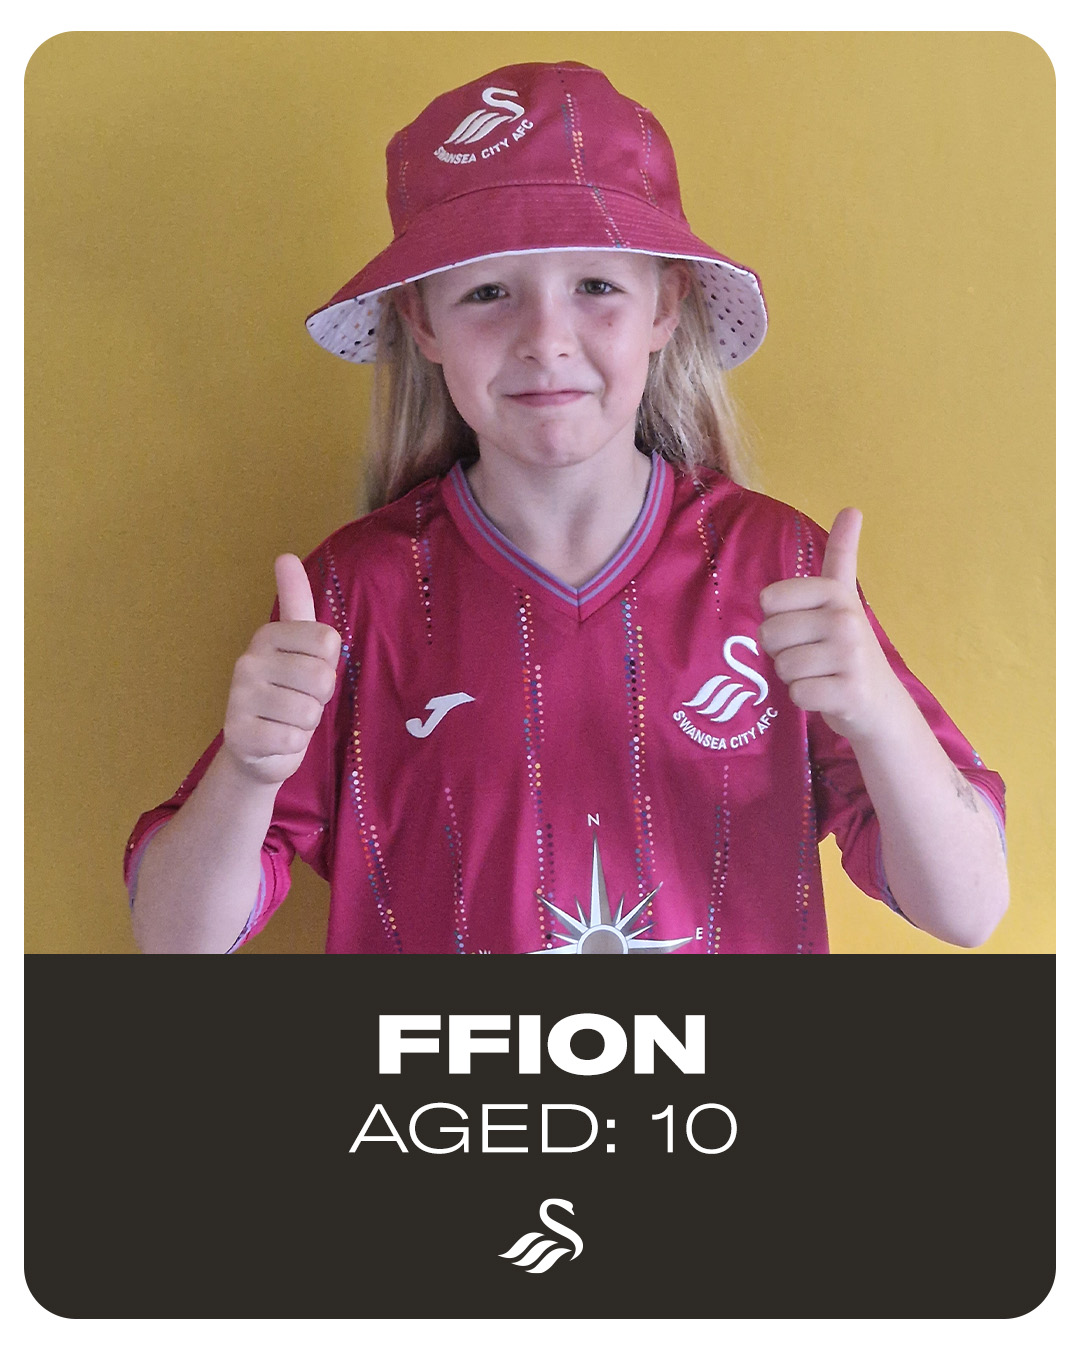 Photograph of Ffion